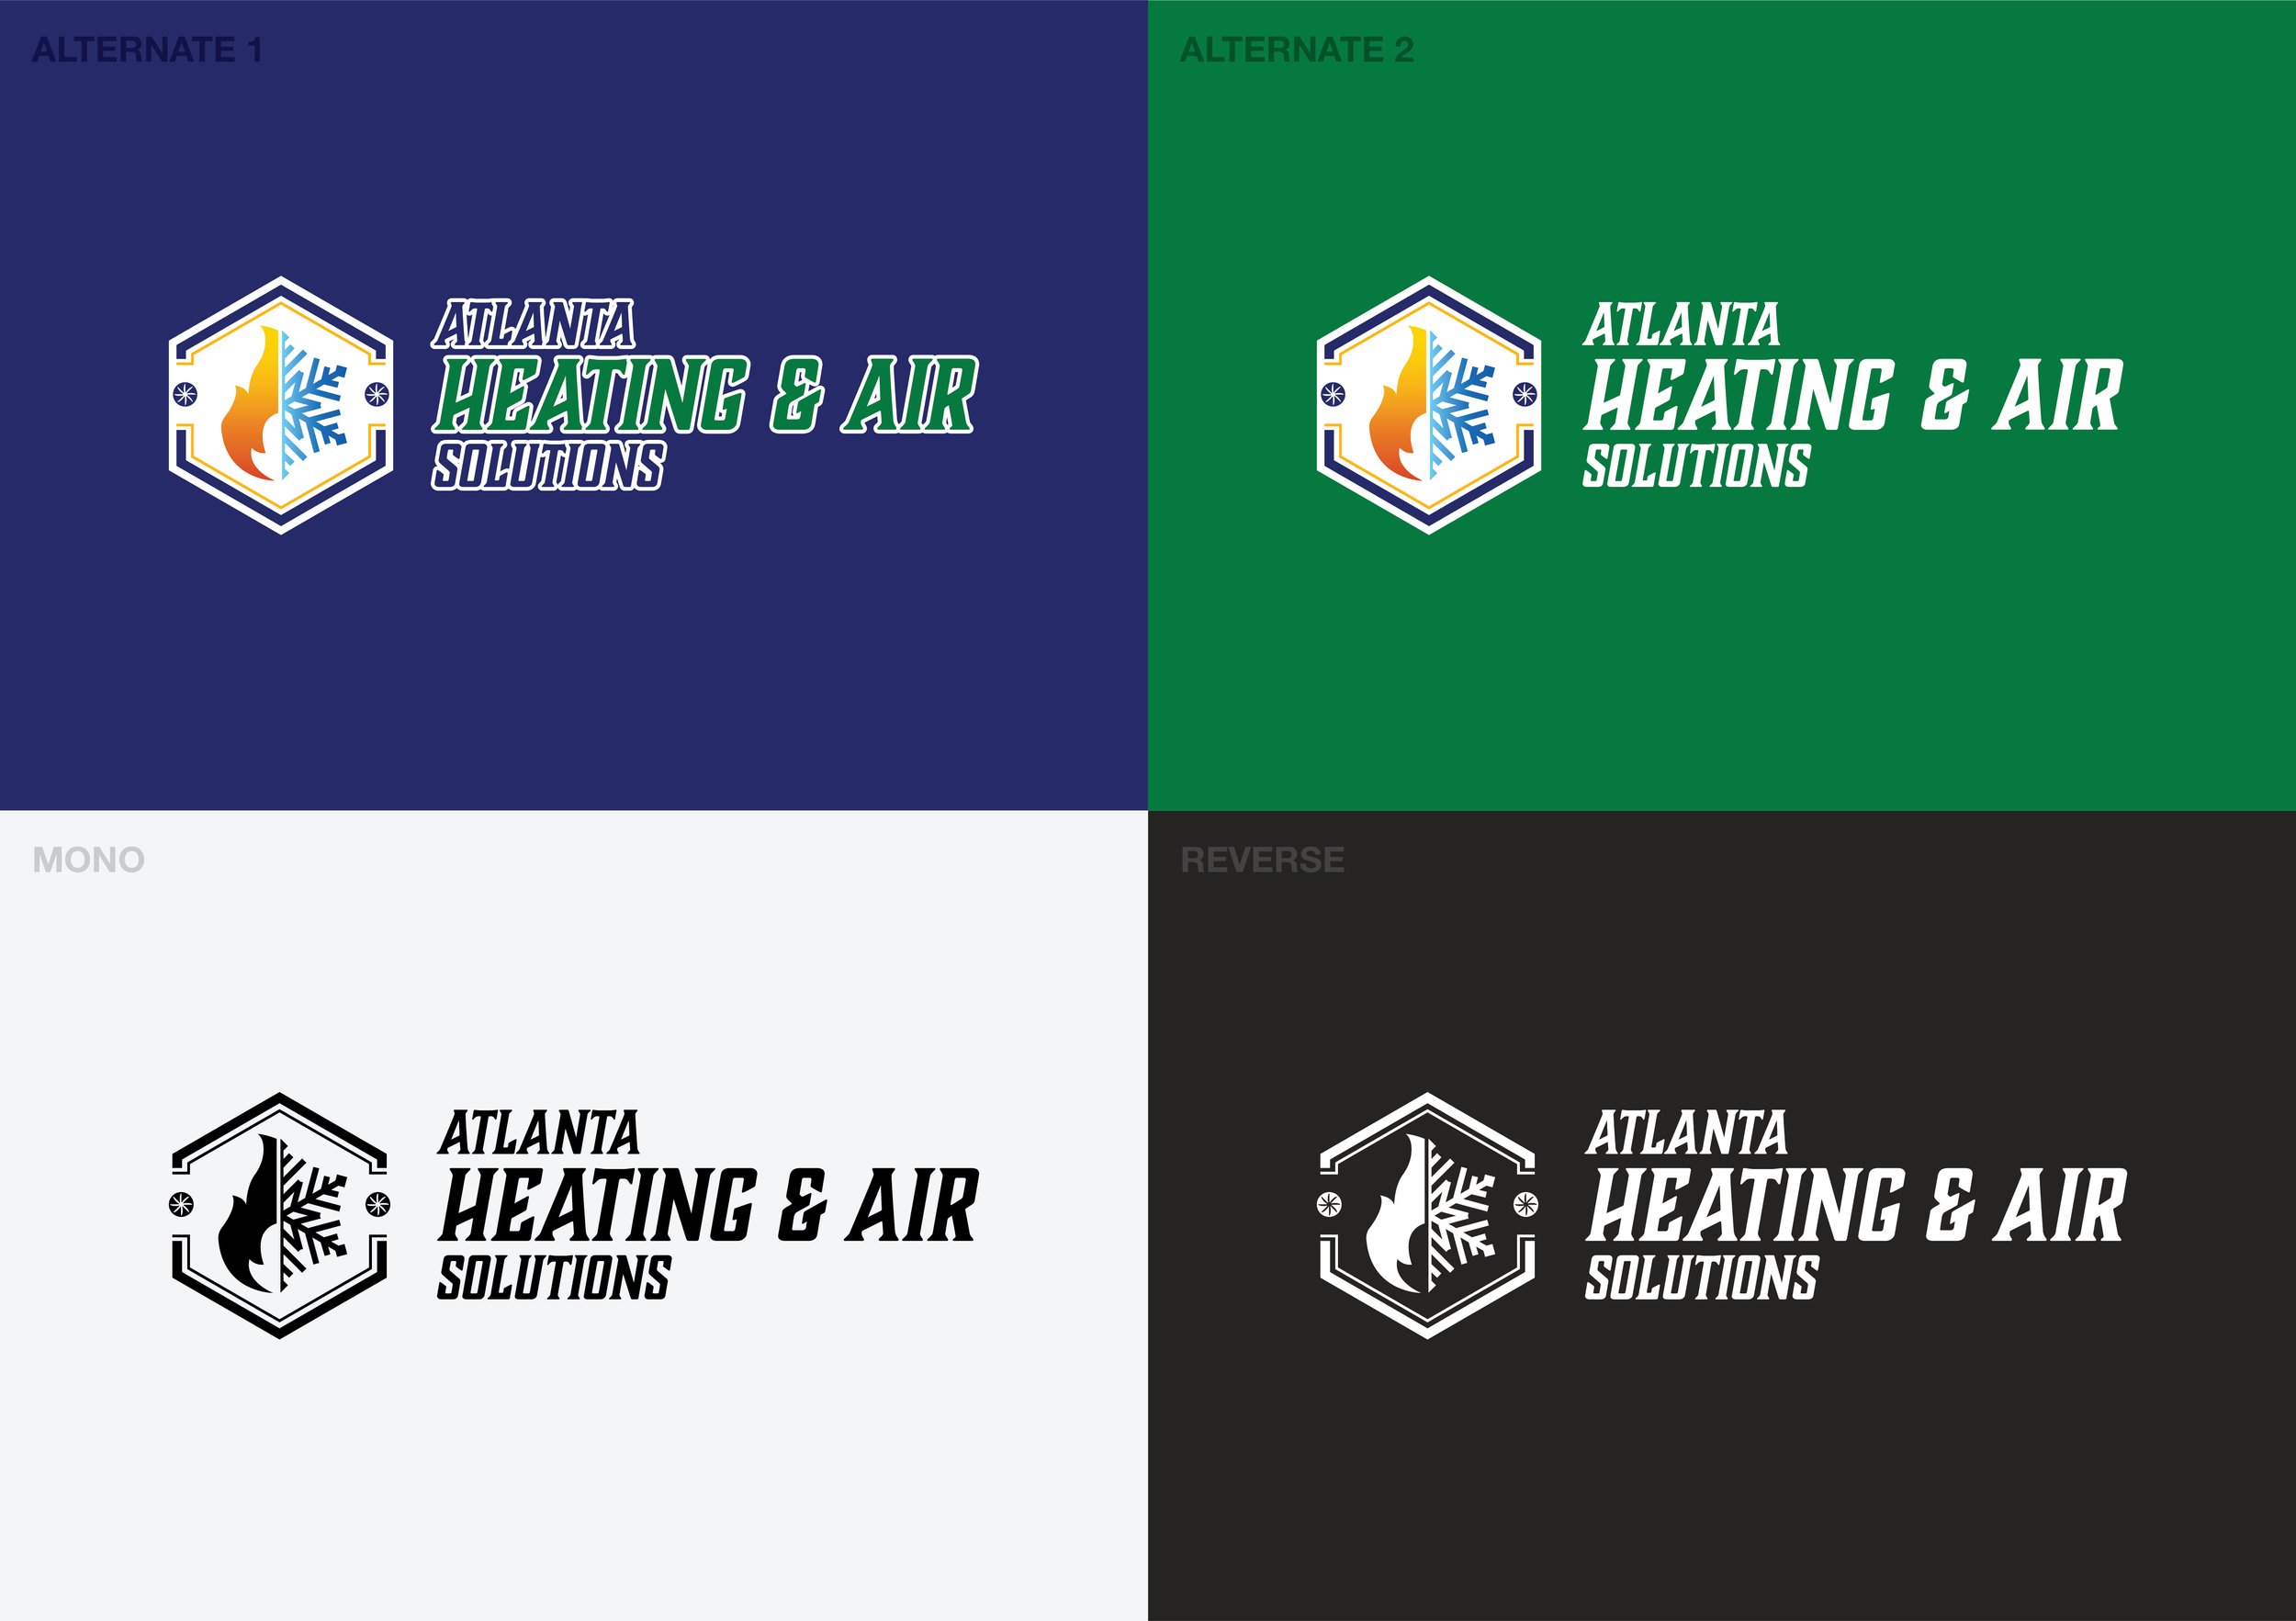 AHAS_080221 - Atlanta Heating and Air - Portfolio Proof 2.jpg